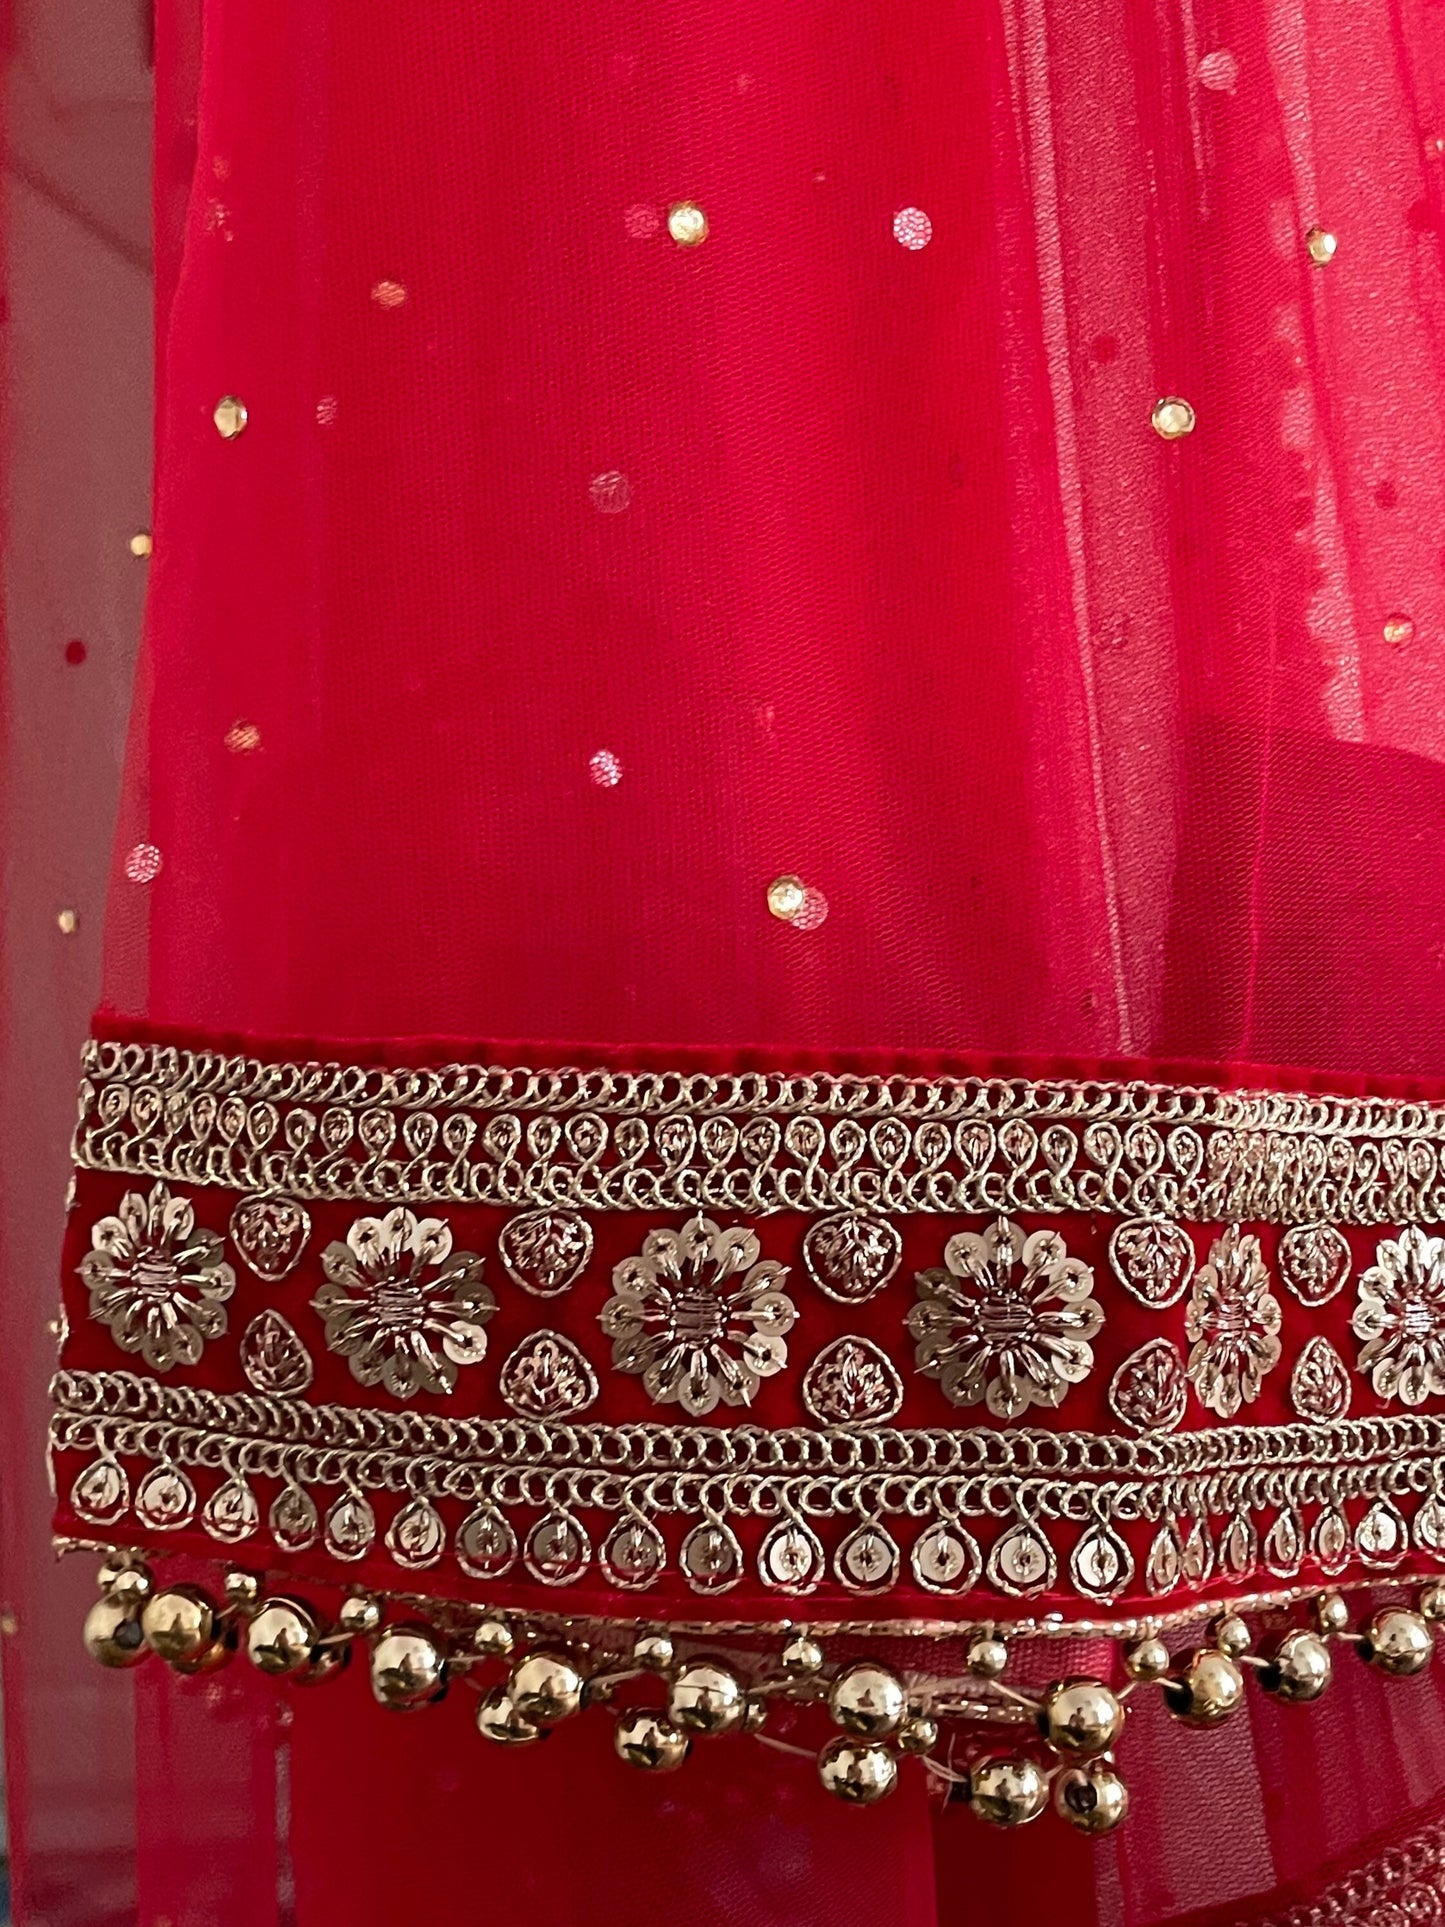 Defective Red Bridal Net Double Second Duppatta for Wedding Outfit Lehenga Chunni Ceremony Sagan Scarf Nikaah Mehendi Mayoon Dholki Indian